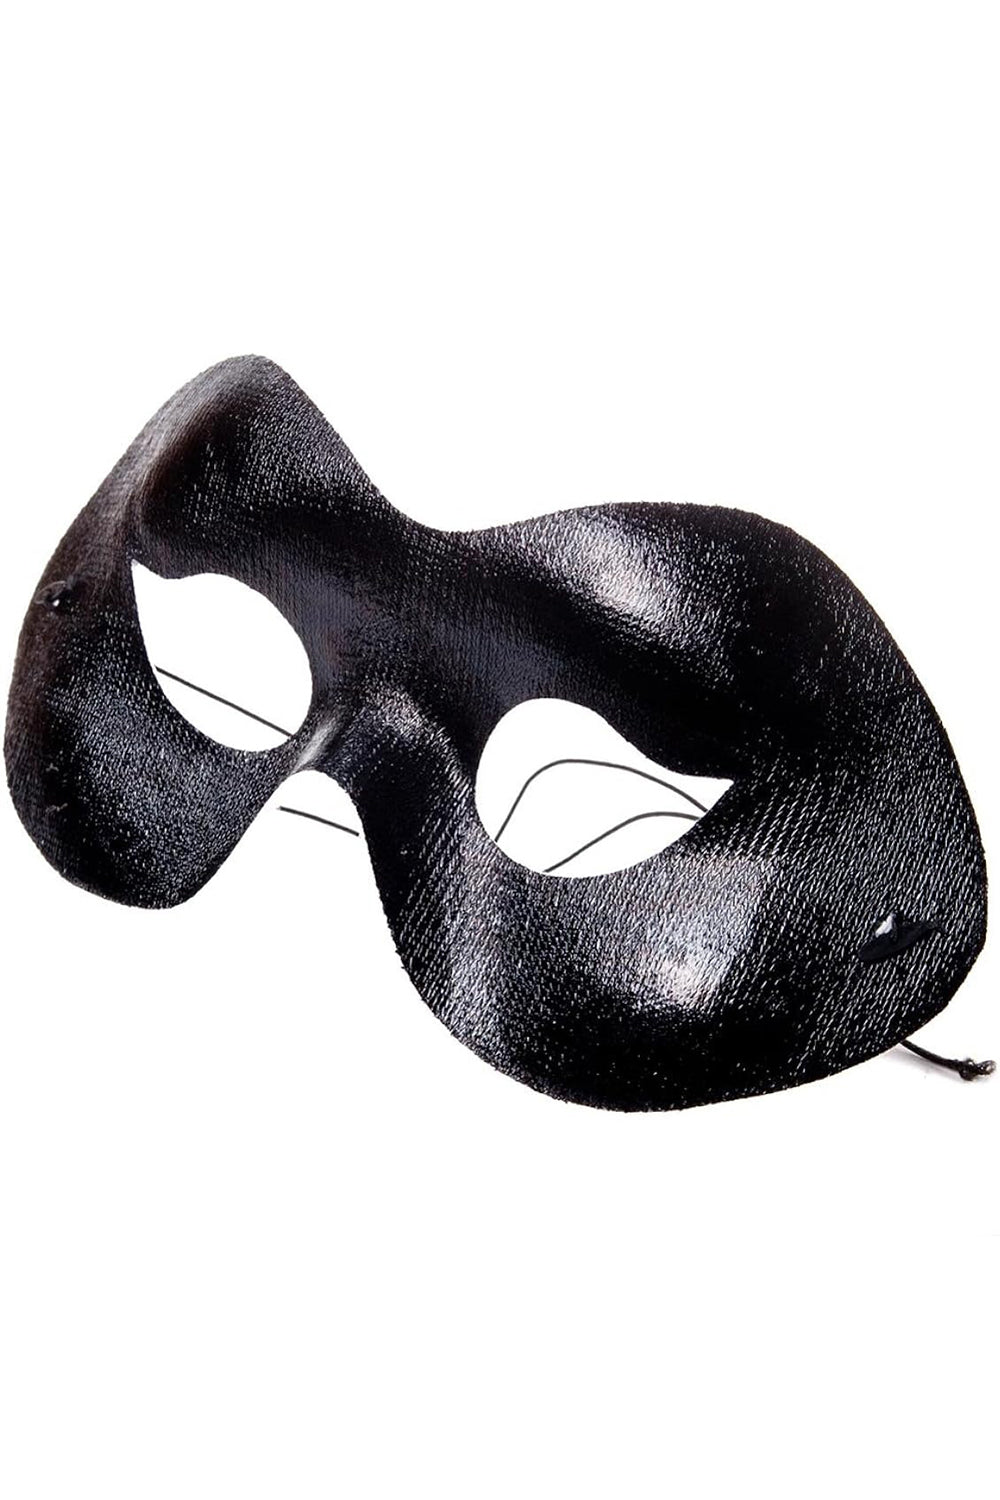 Black Eye Mask